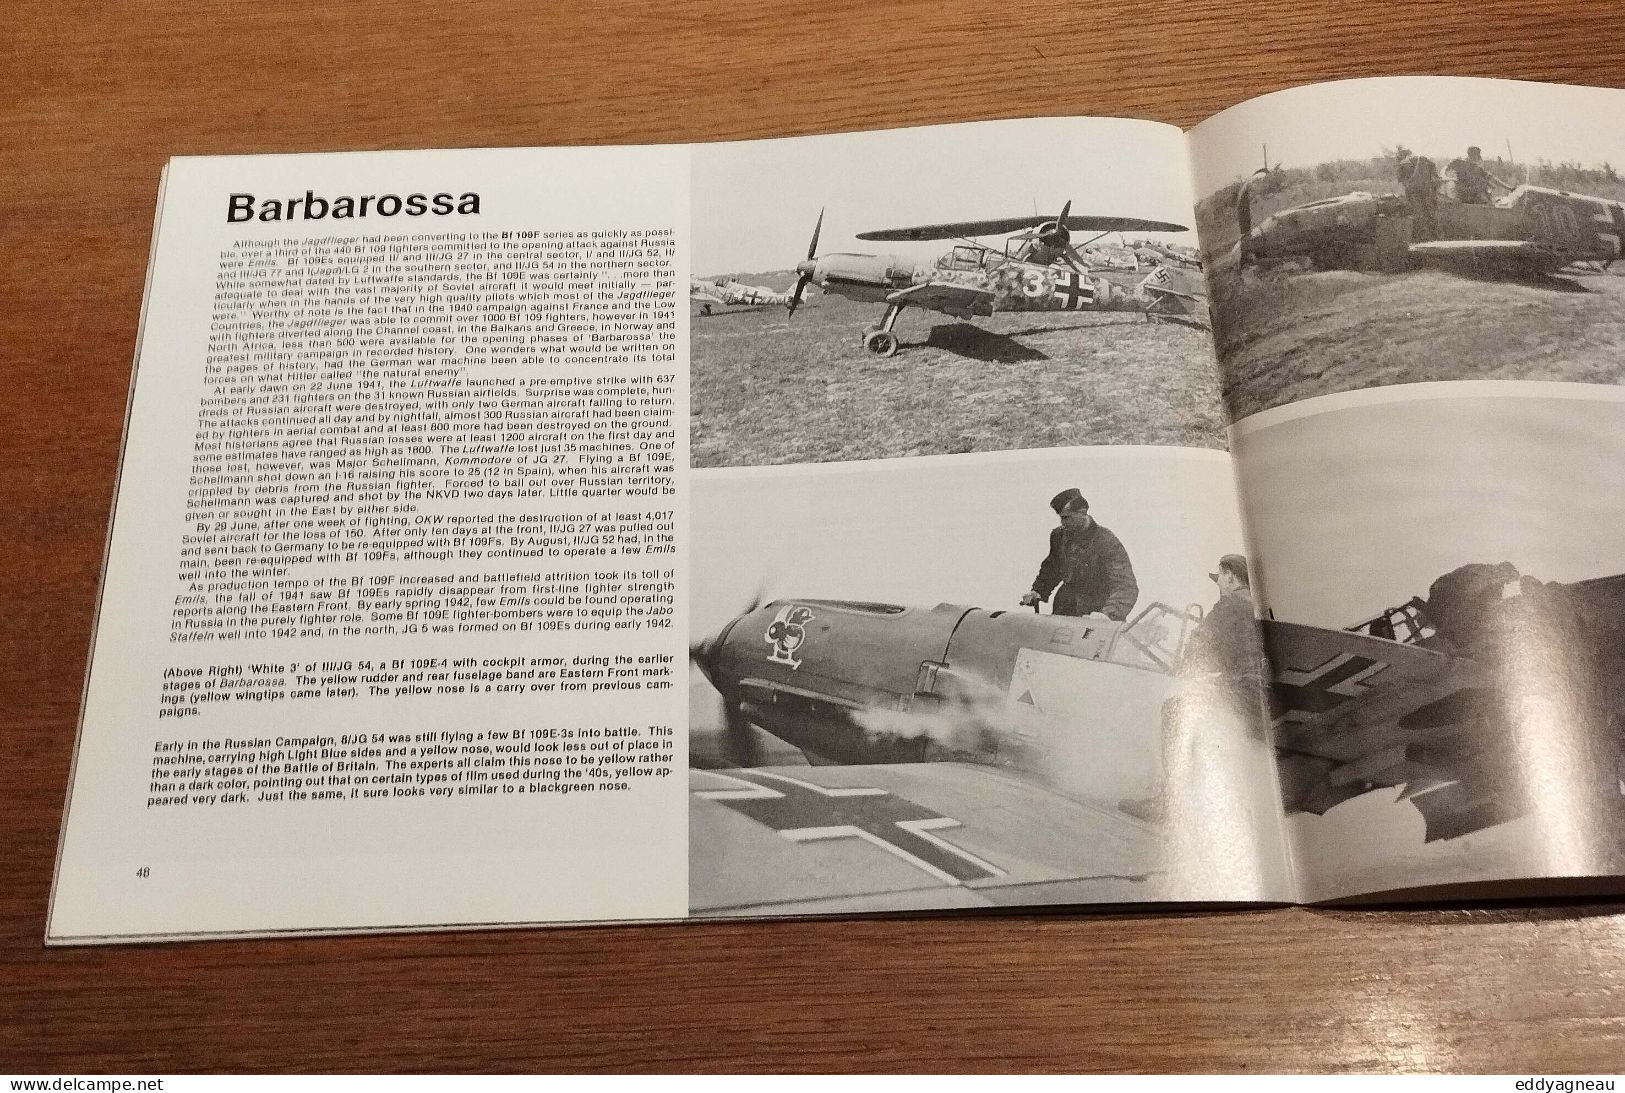 Messerschmitt BT 109 in action - Part 1 &2 - Squadron/Signal publications